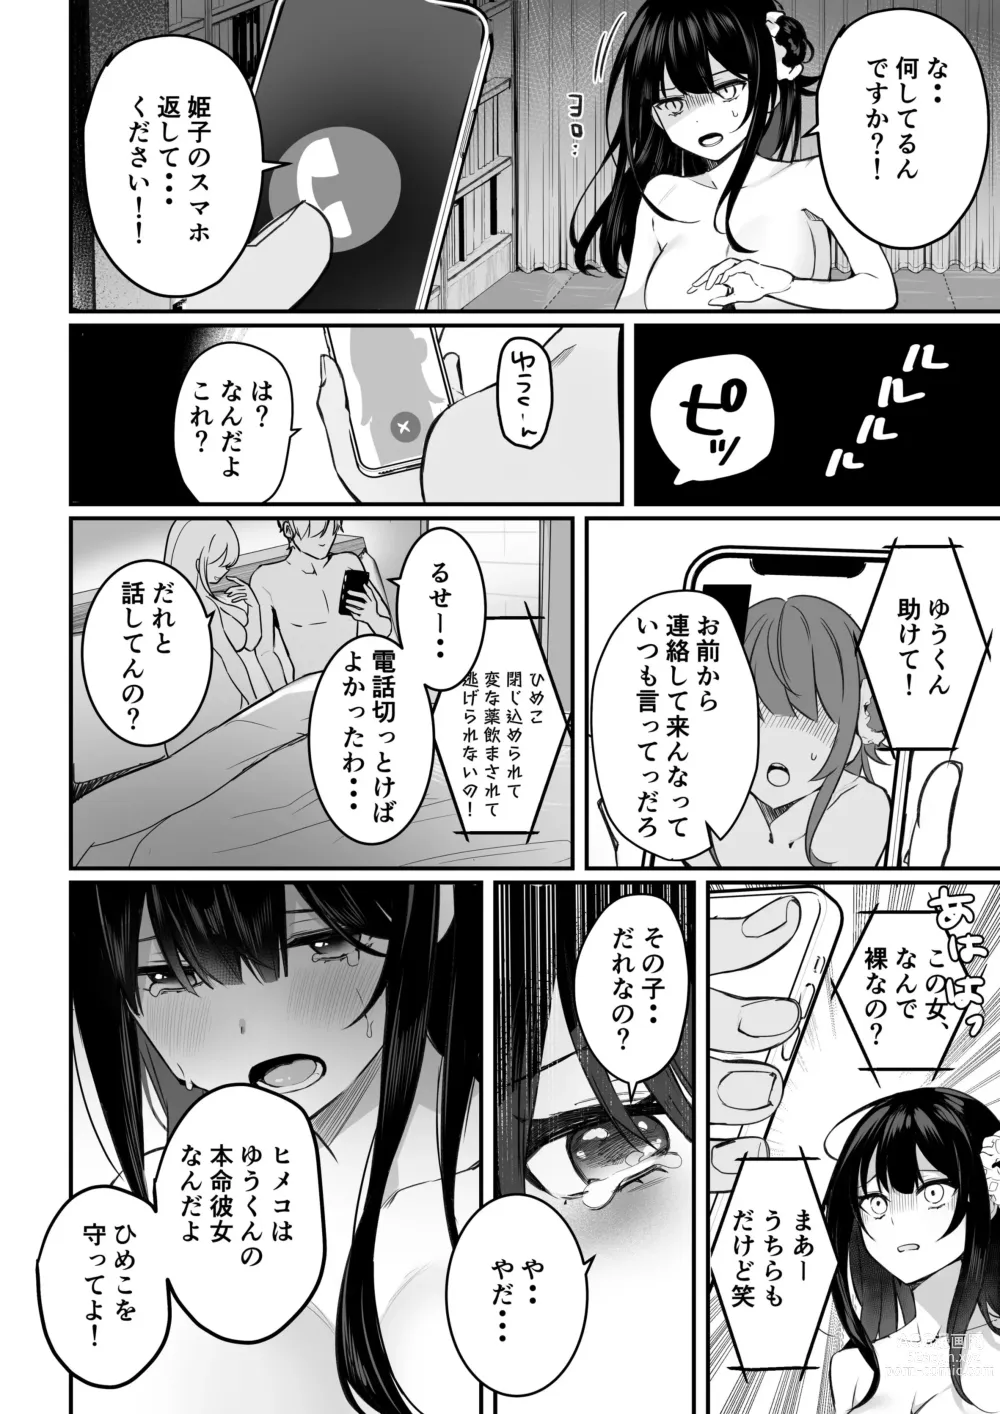 Page 5 of doujinshi Himeko Manga